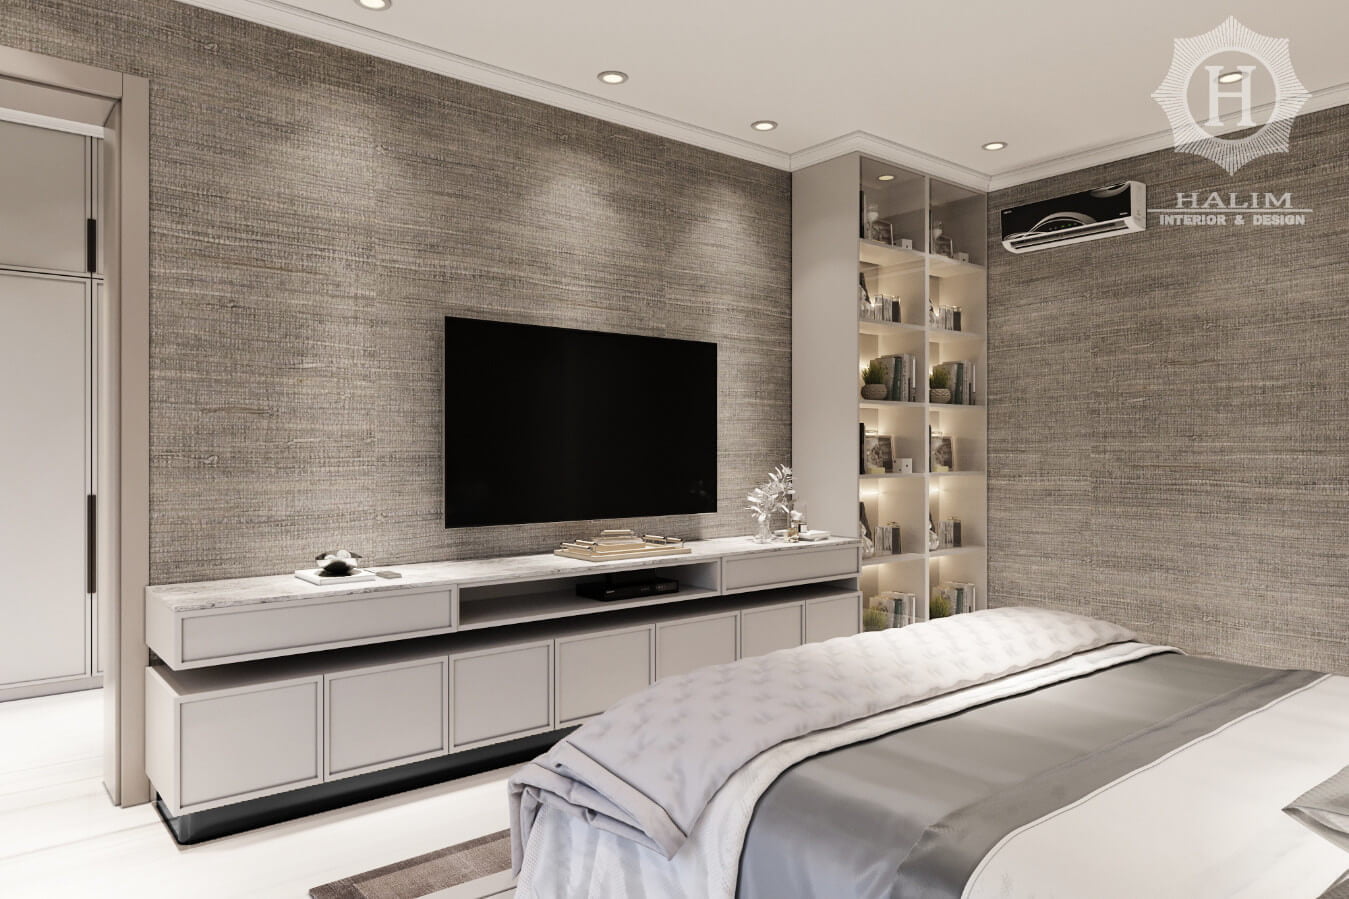 Halim Interior modern furniture contemporer american style minimalist european classic surabaya 74.PUNCAK PERMAI